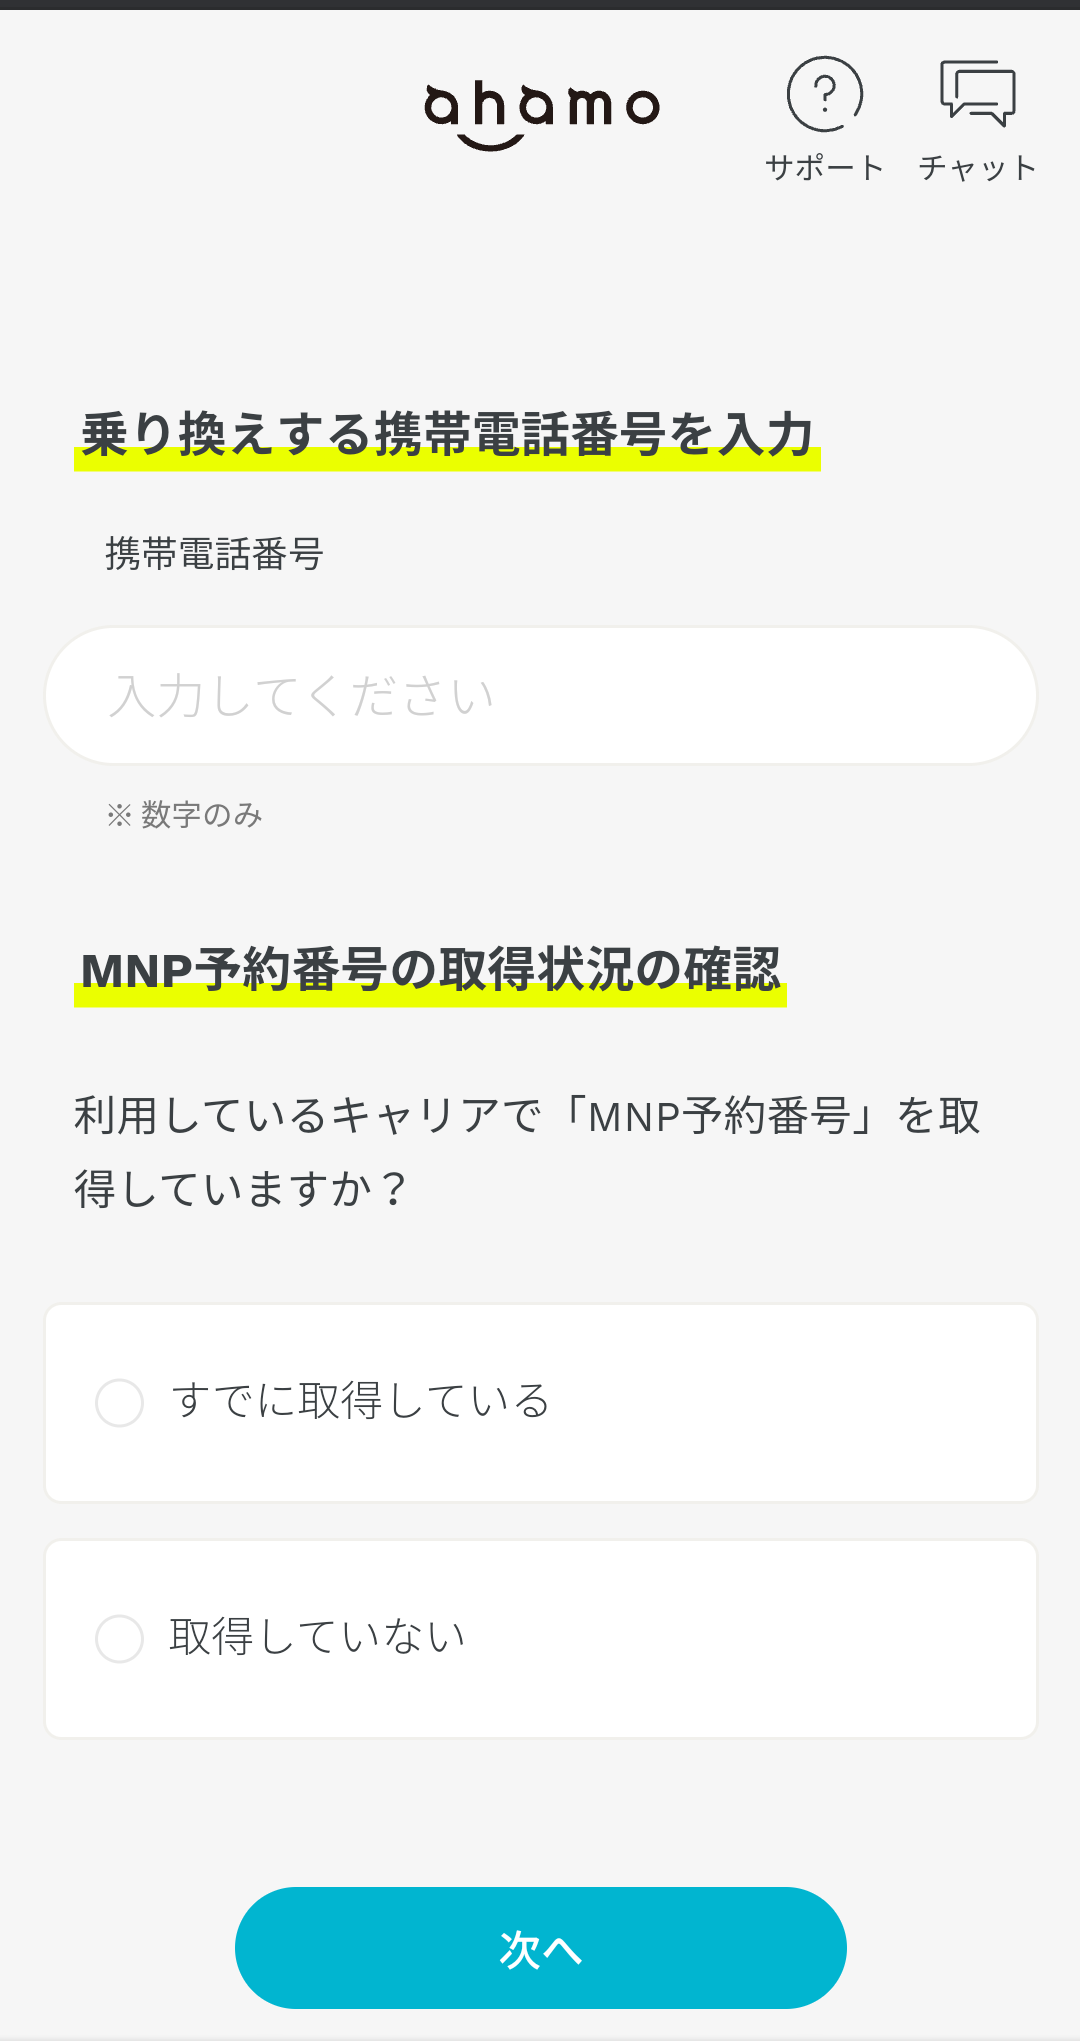 ahamoのmnp手順 乗り換えする形態電話番号の入力・MNP予約番号の取得状況の確認